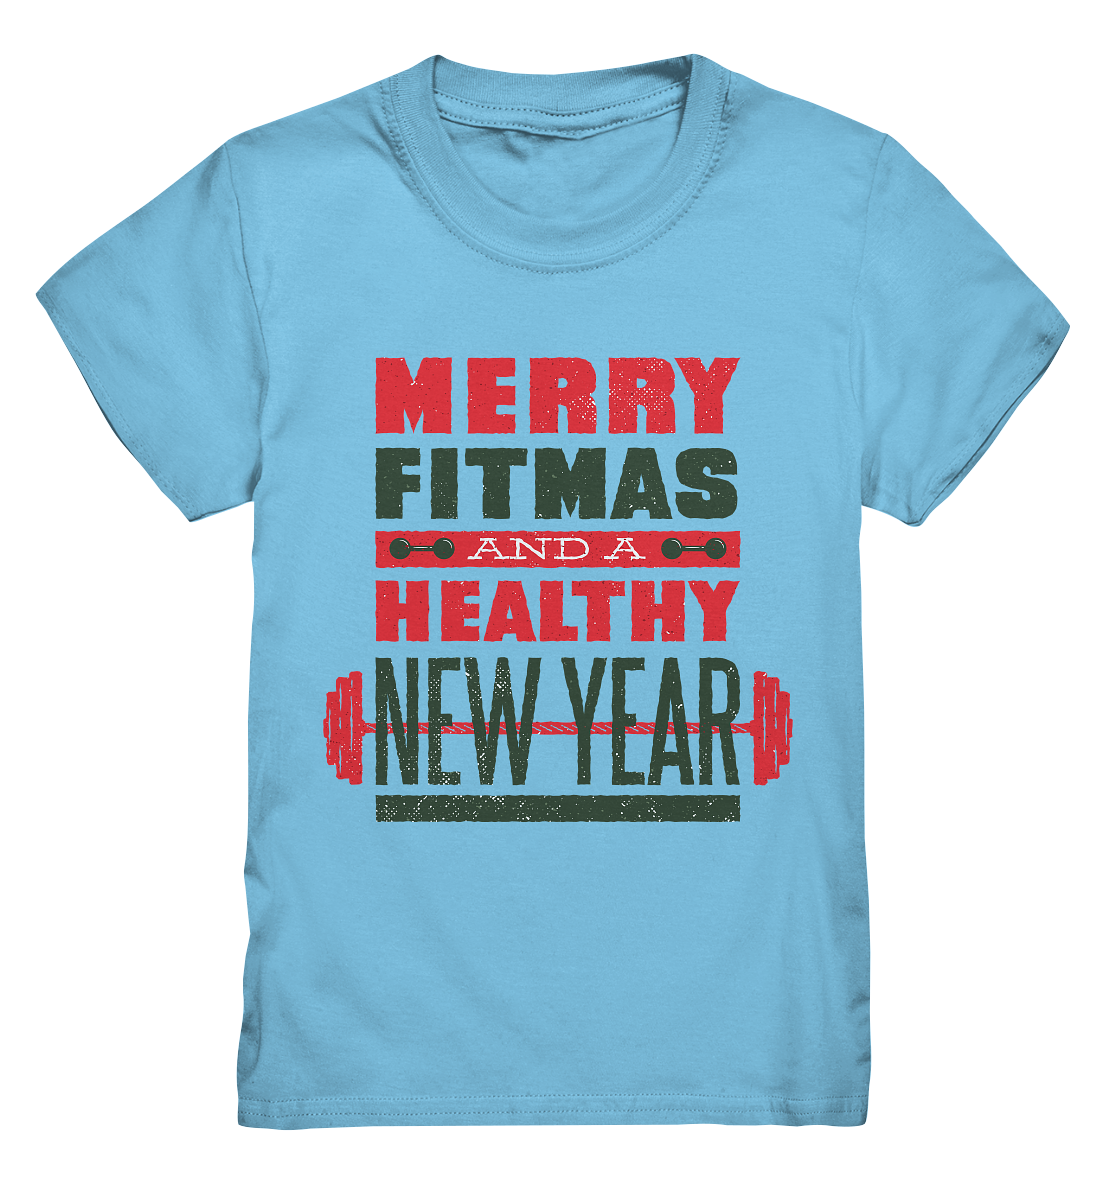 Weihnachtliches Design, Gym, Merry Fitmas and a Healthy New Year - Kids Premium Shirt